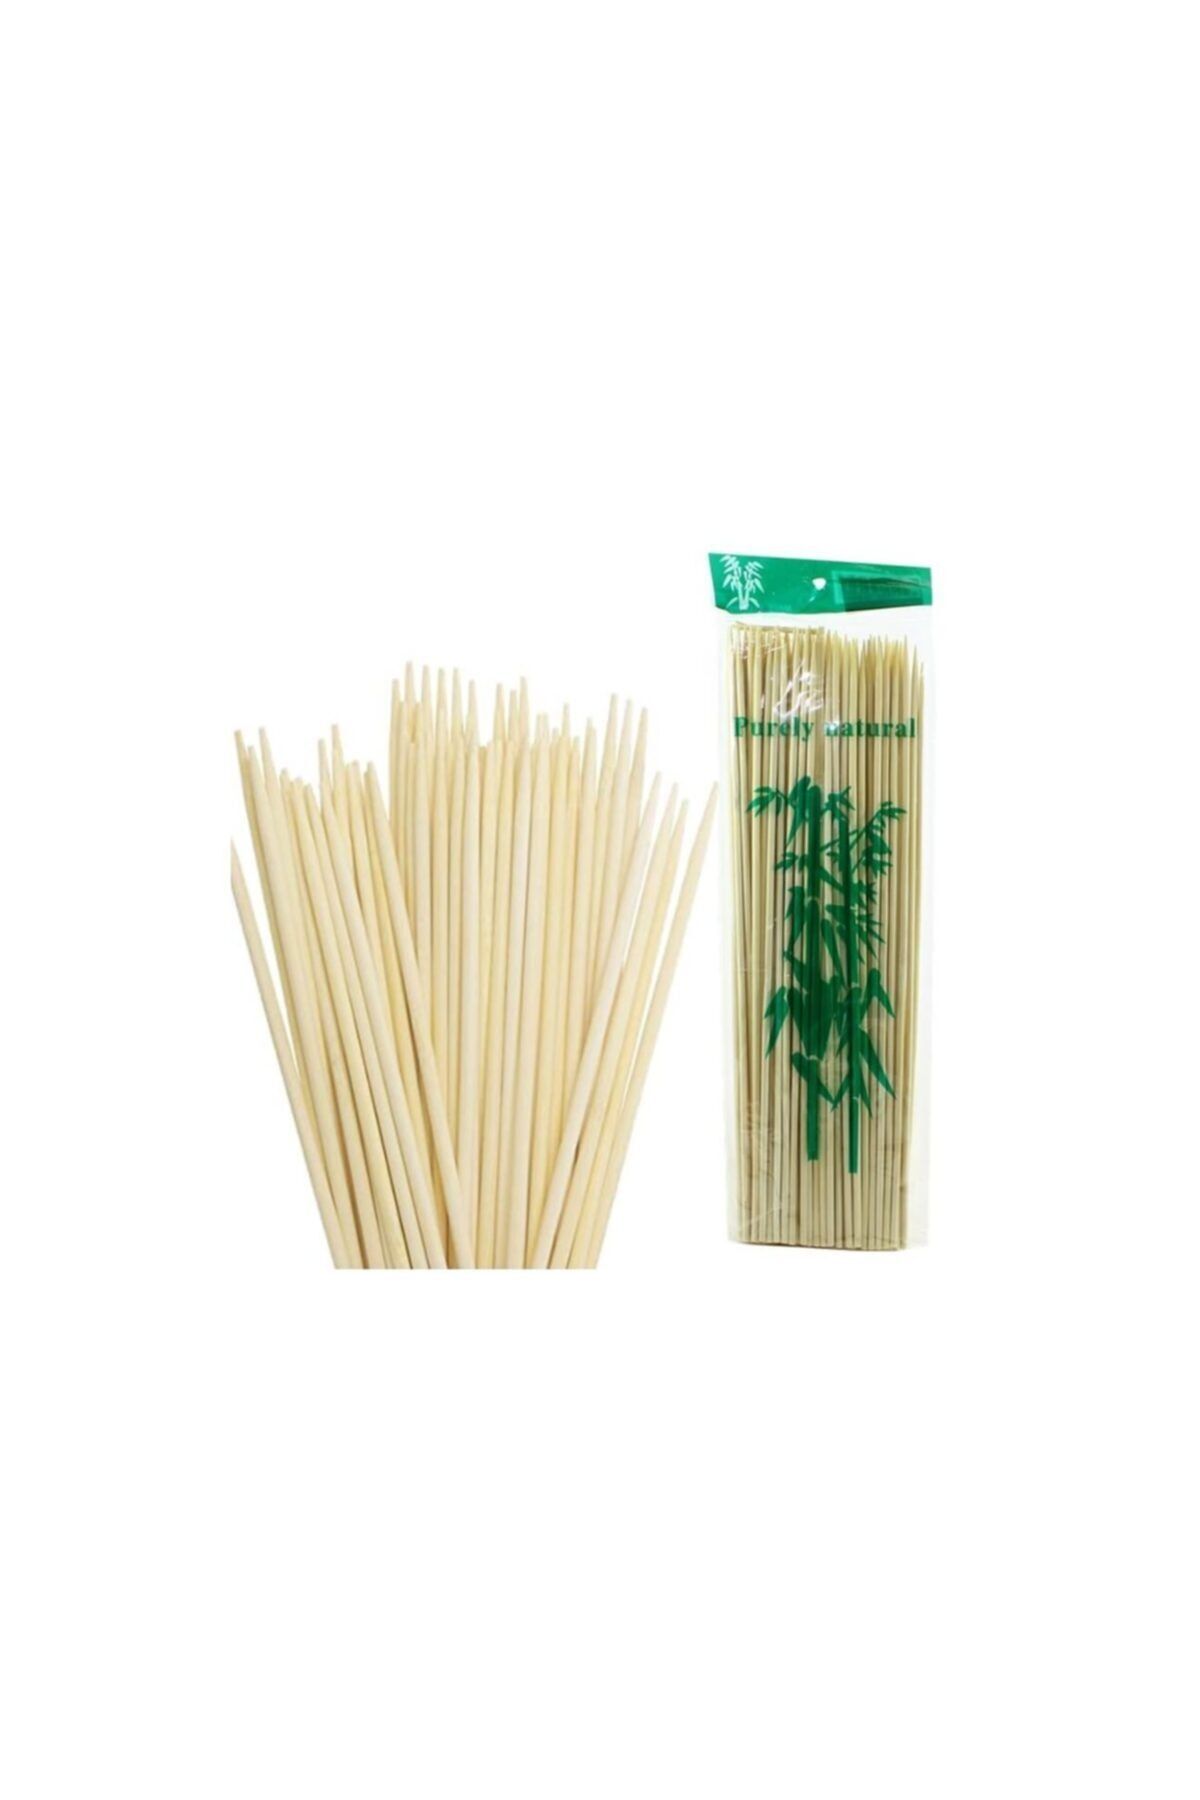 Kalmia 300 Adet 15 Cm Bambu Çöp Şiş